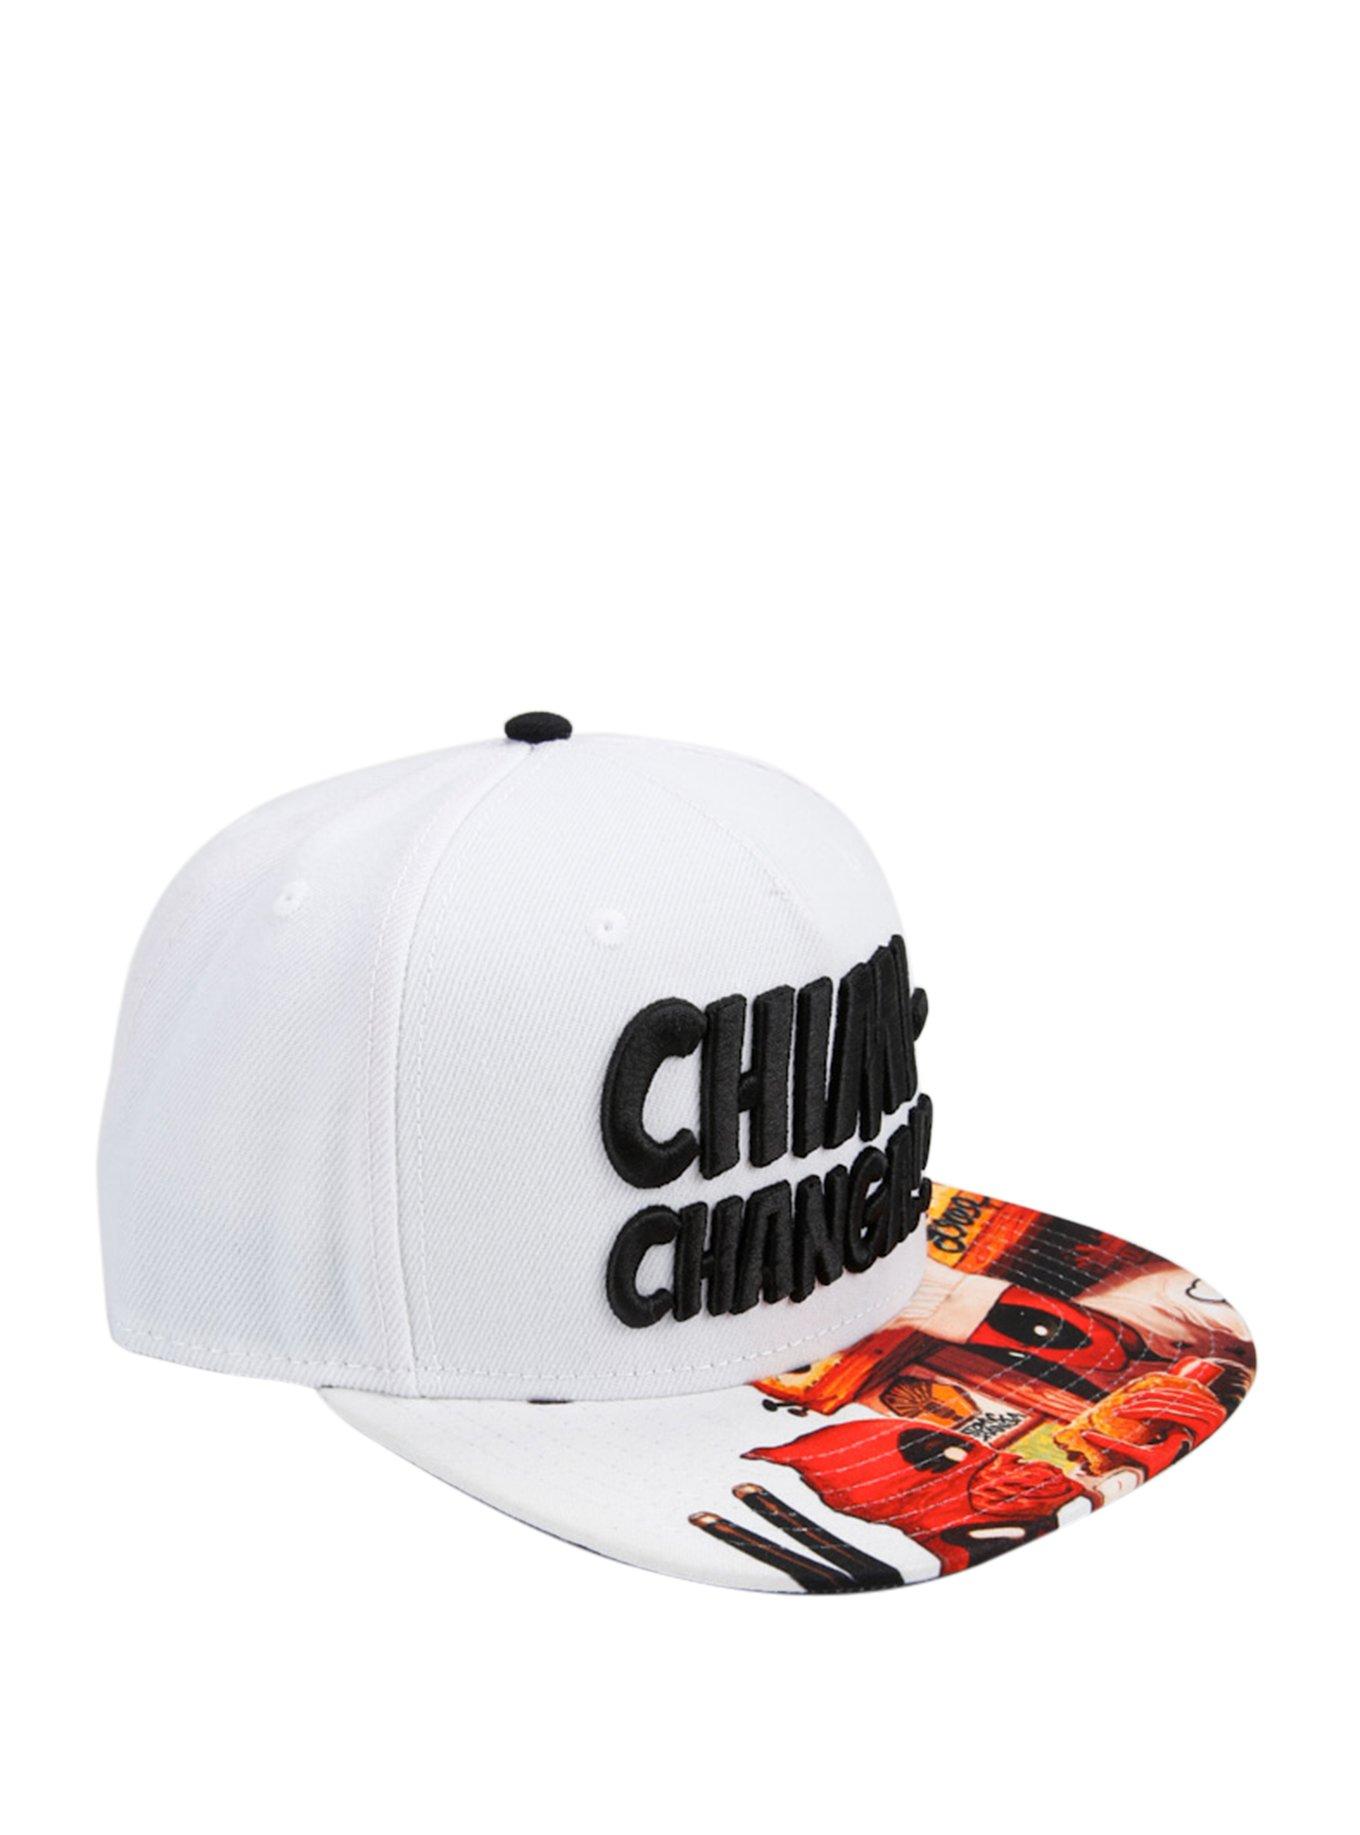 Marvel Deadpool Chimichanga Sublimated Bill Snapback Hat, , hi-res